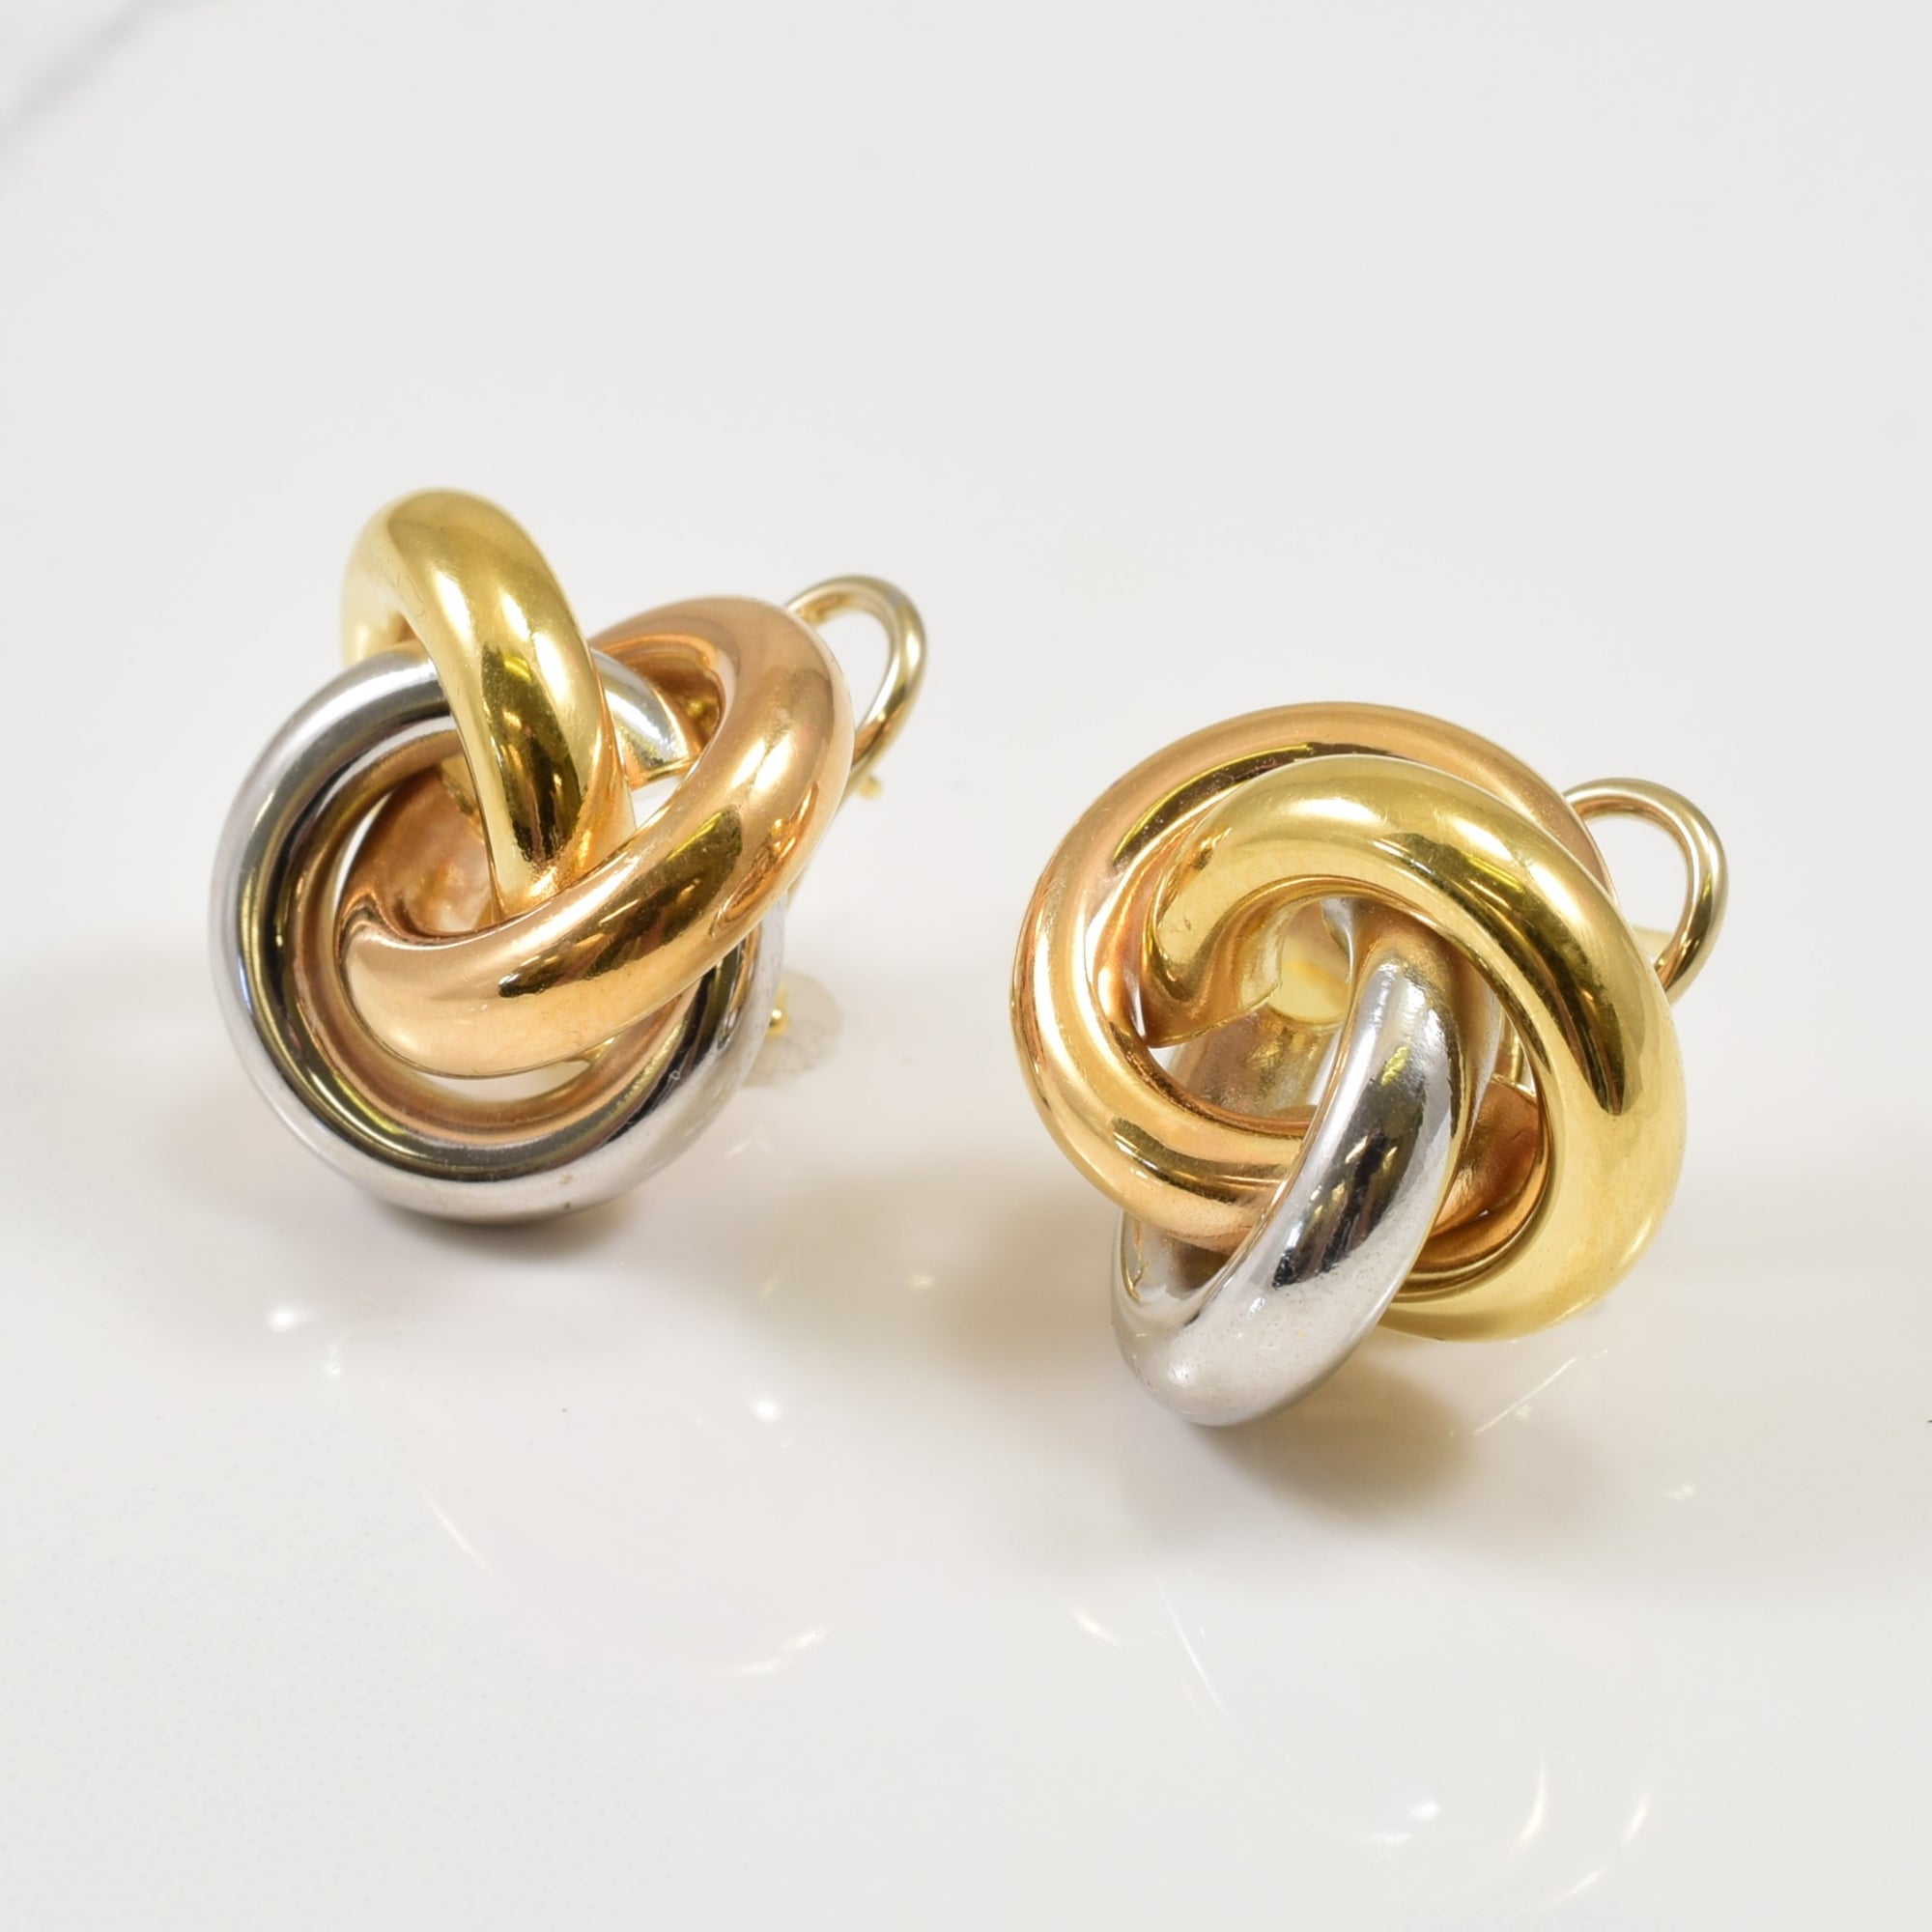 Birks' 18k Tri Toned Gold Interlocking Circle Earrings